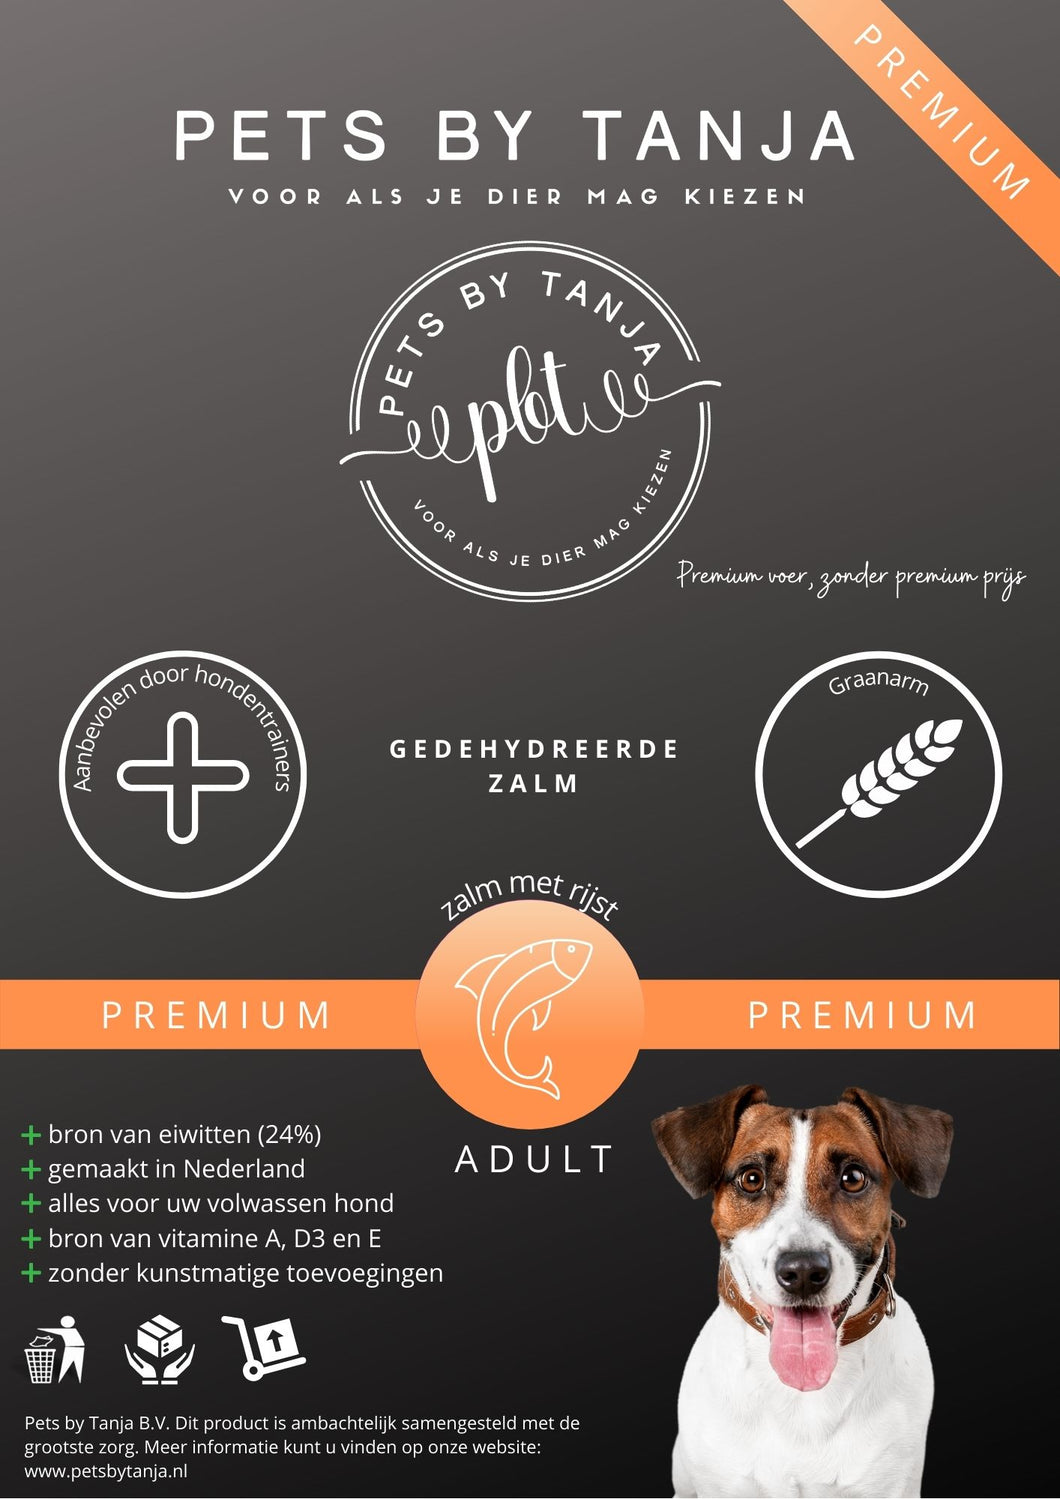 Premium Adult zalm rijst hondenvoer - Pets by Tanja